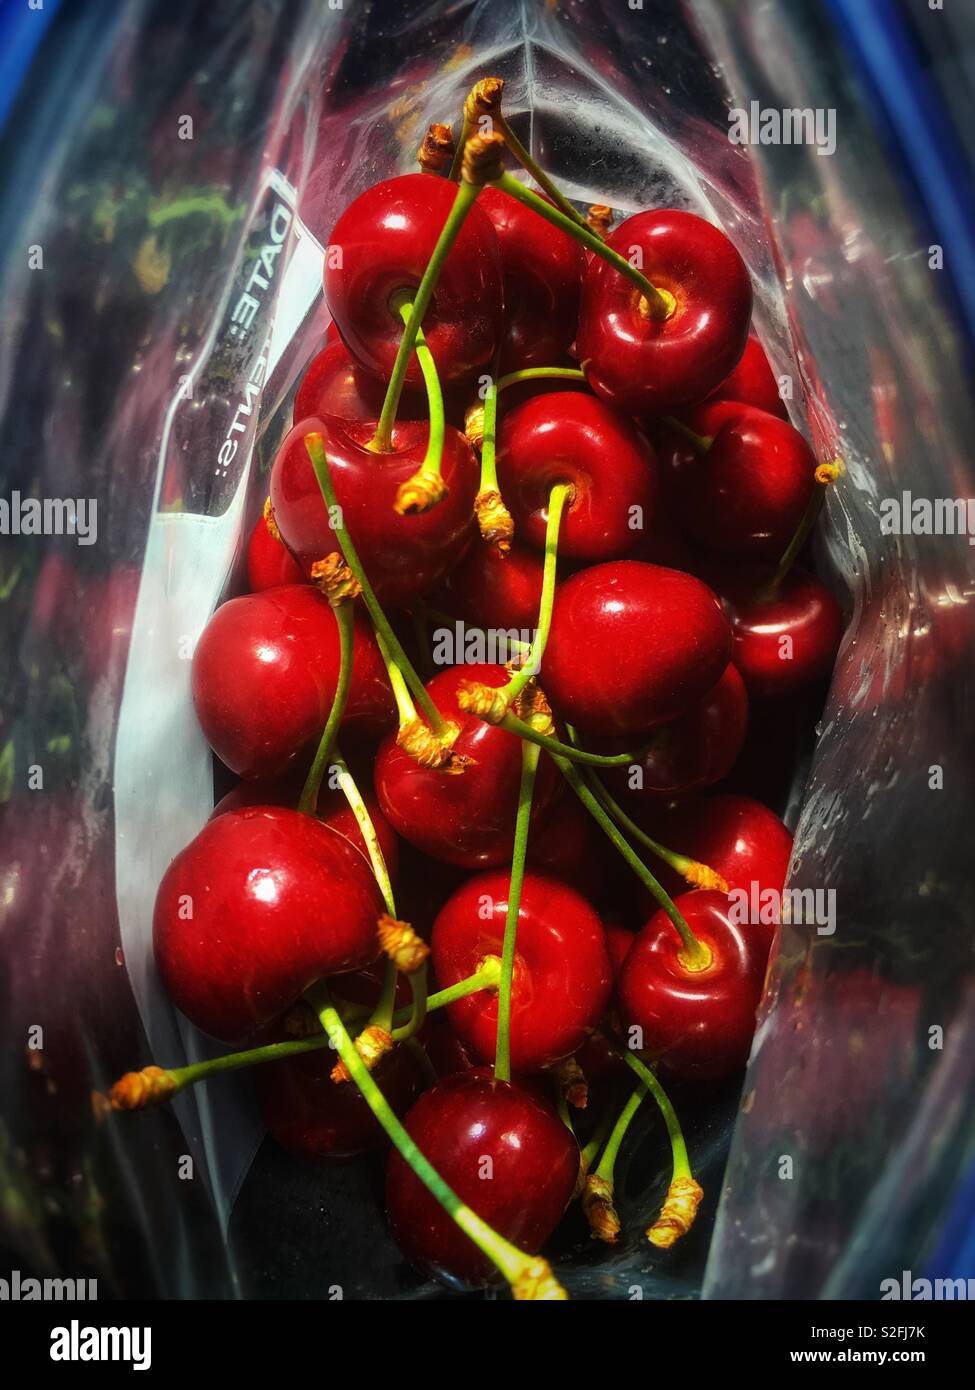 https://c8.alamy.com/comp/S2FJ7K/freshly-picked-cherries-in-a-zip-lock-bag-S2FJ7K.jpg